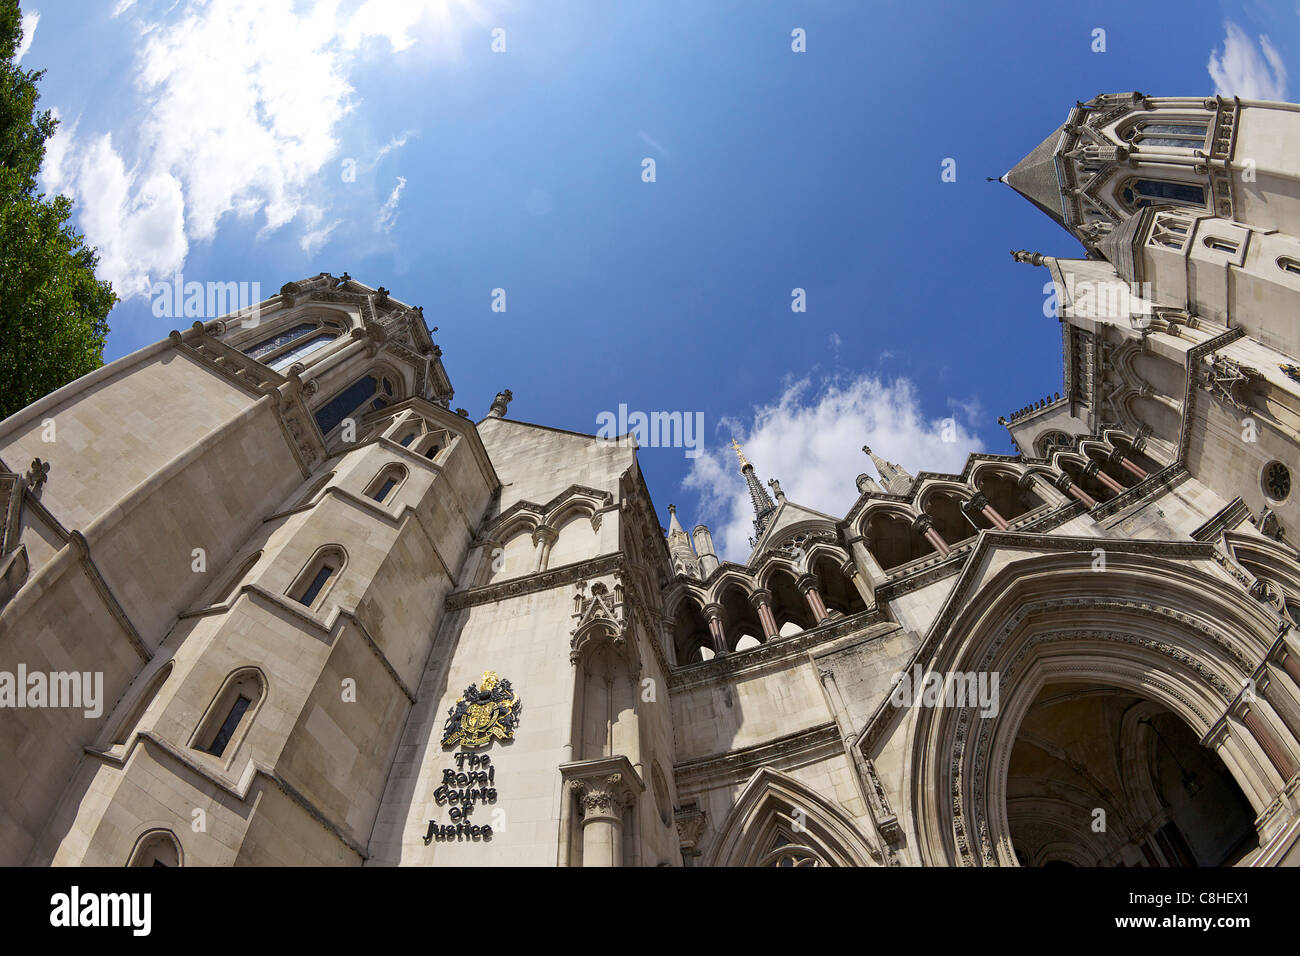 Royal Courts of Justice, City of London, England, UK, United Kingdom, GB, Great Britain, British Isles, Europe Stock Photo